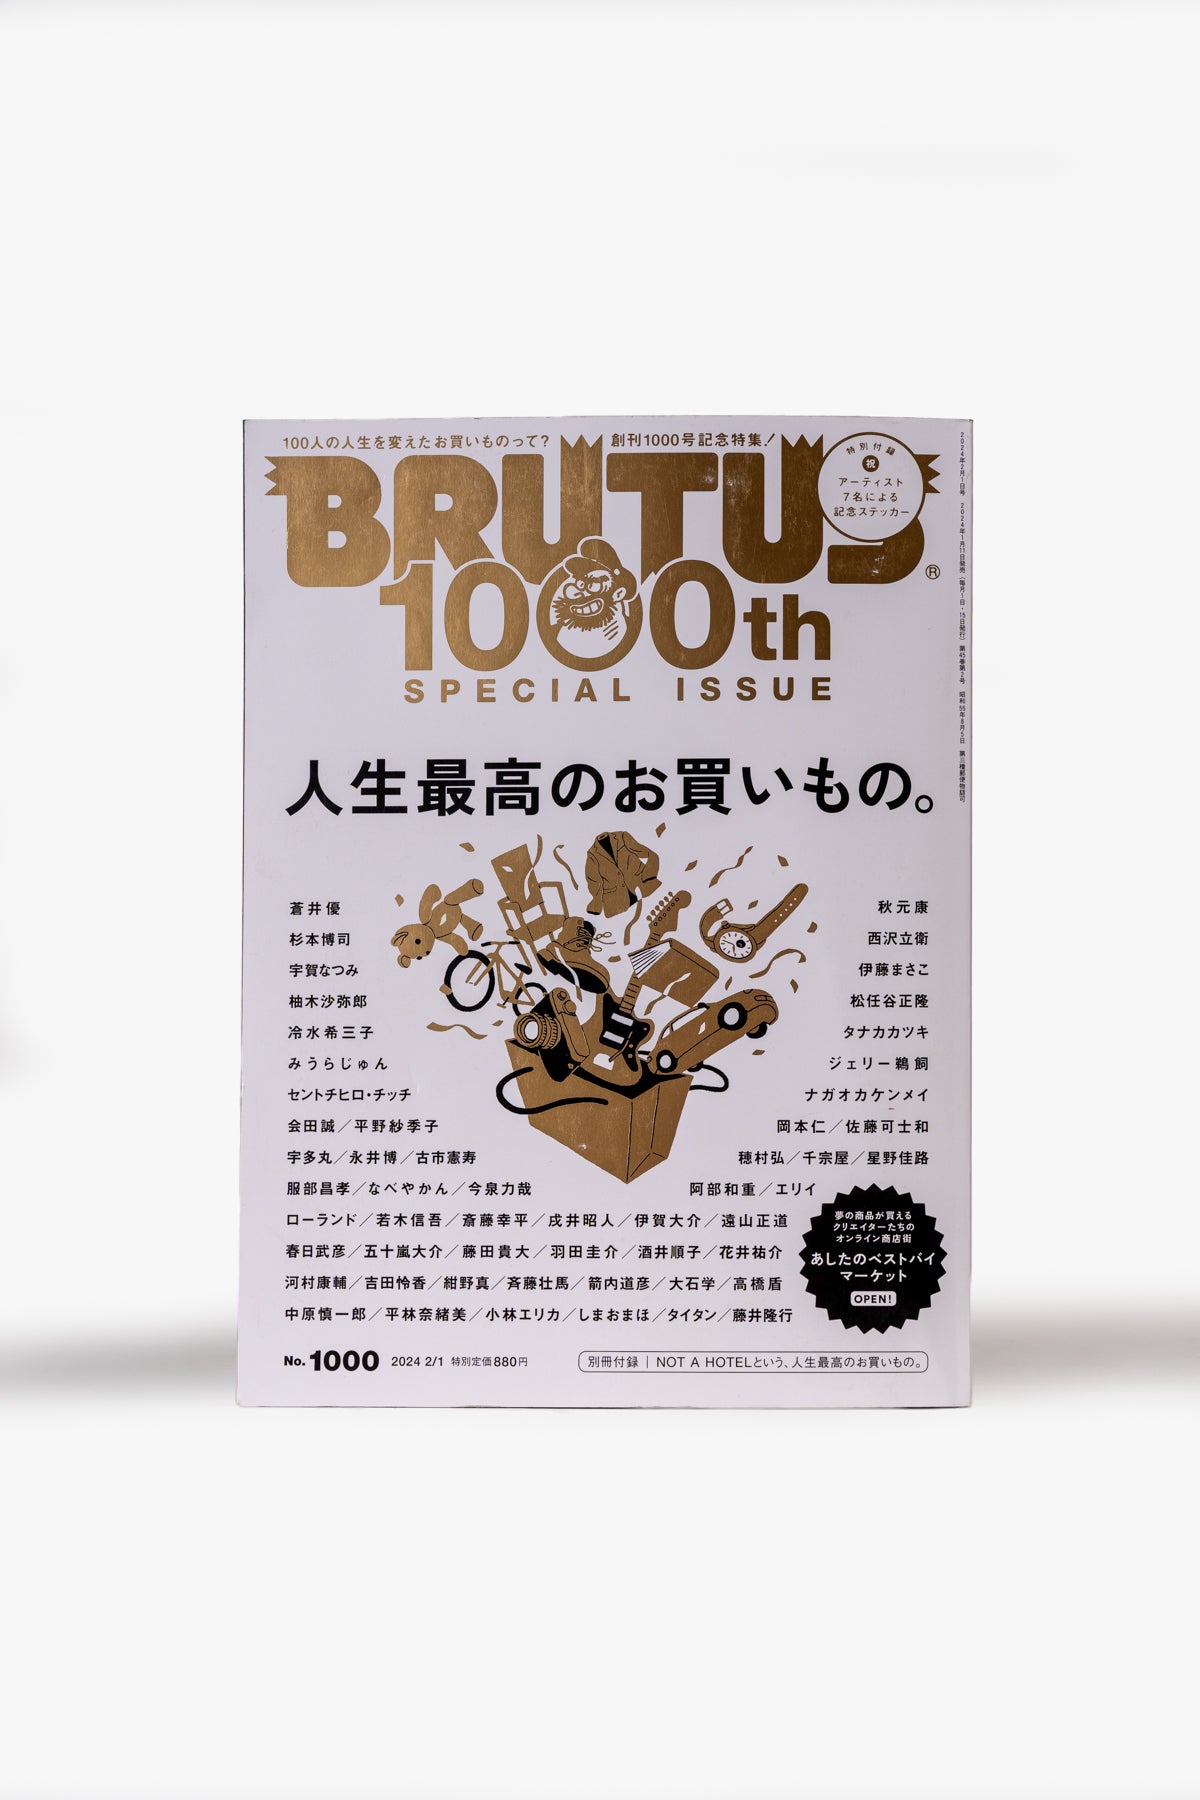 Revista Brutus 1000th Special Issue